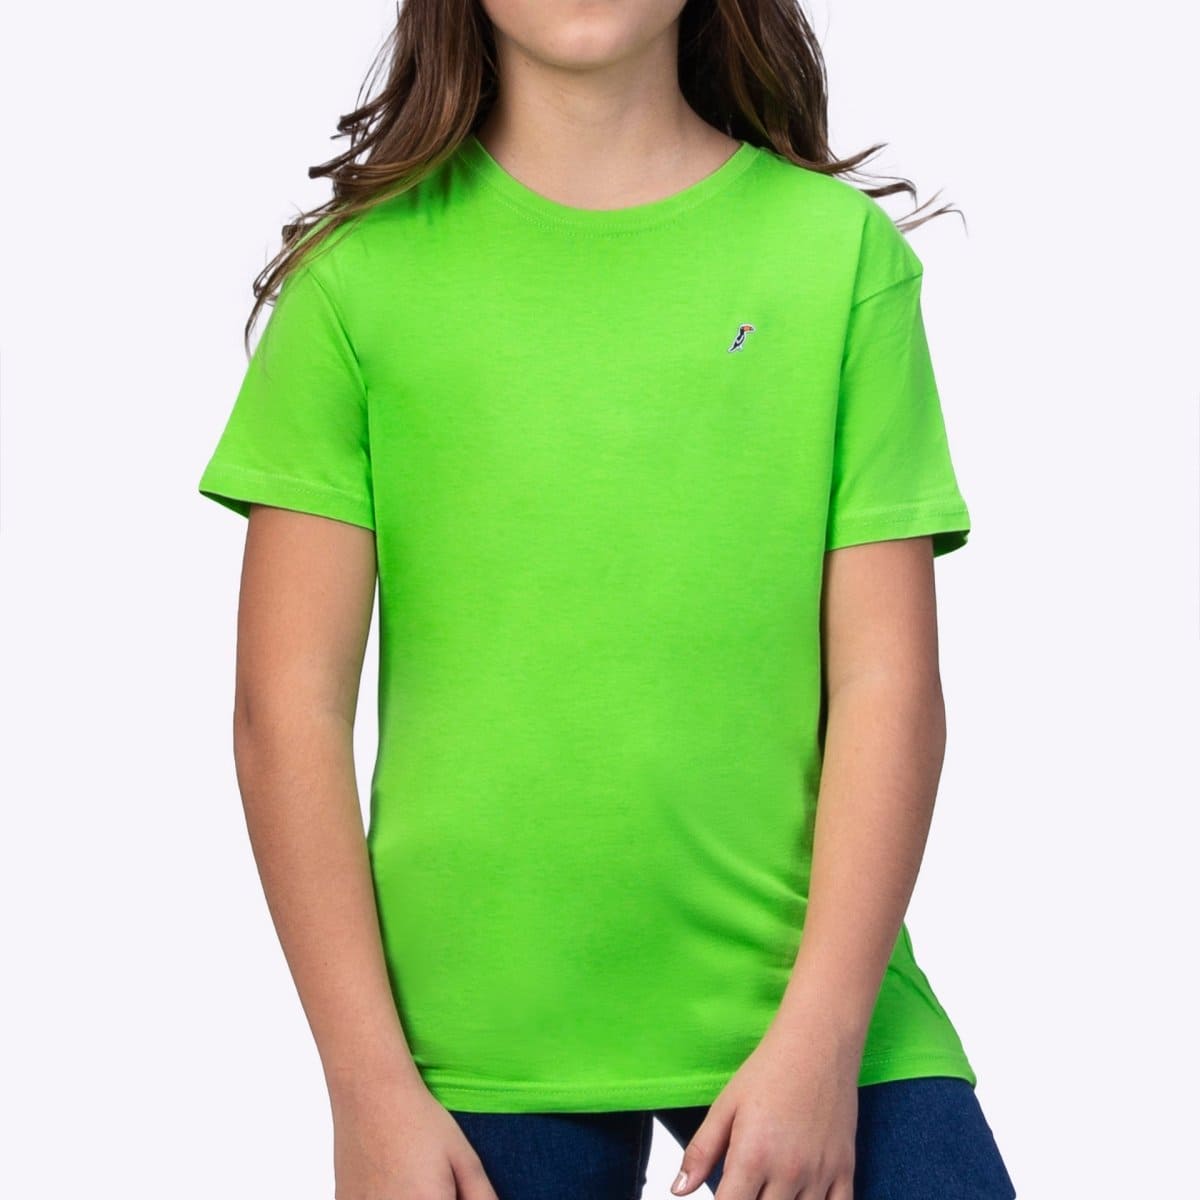 Camiseta verde limón